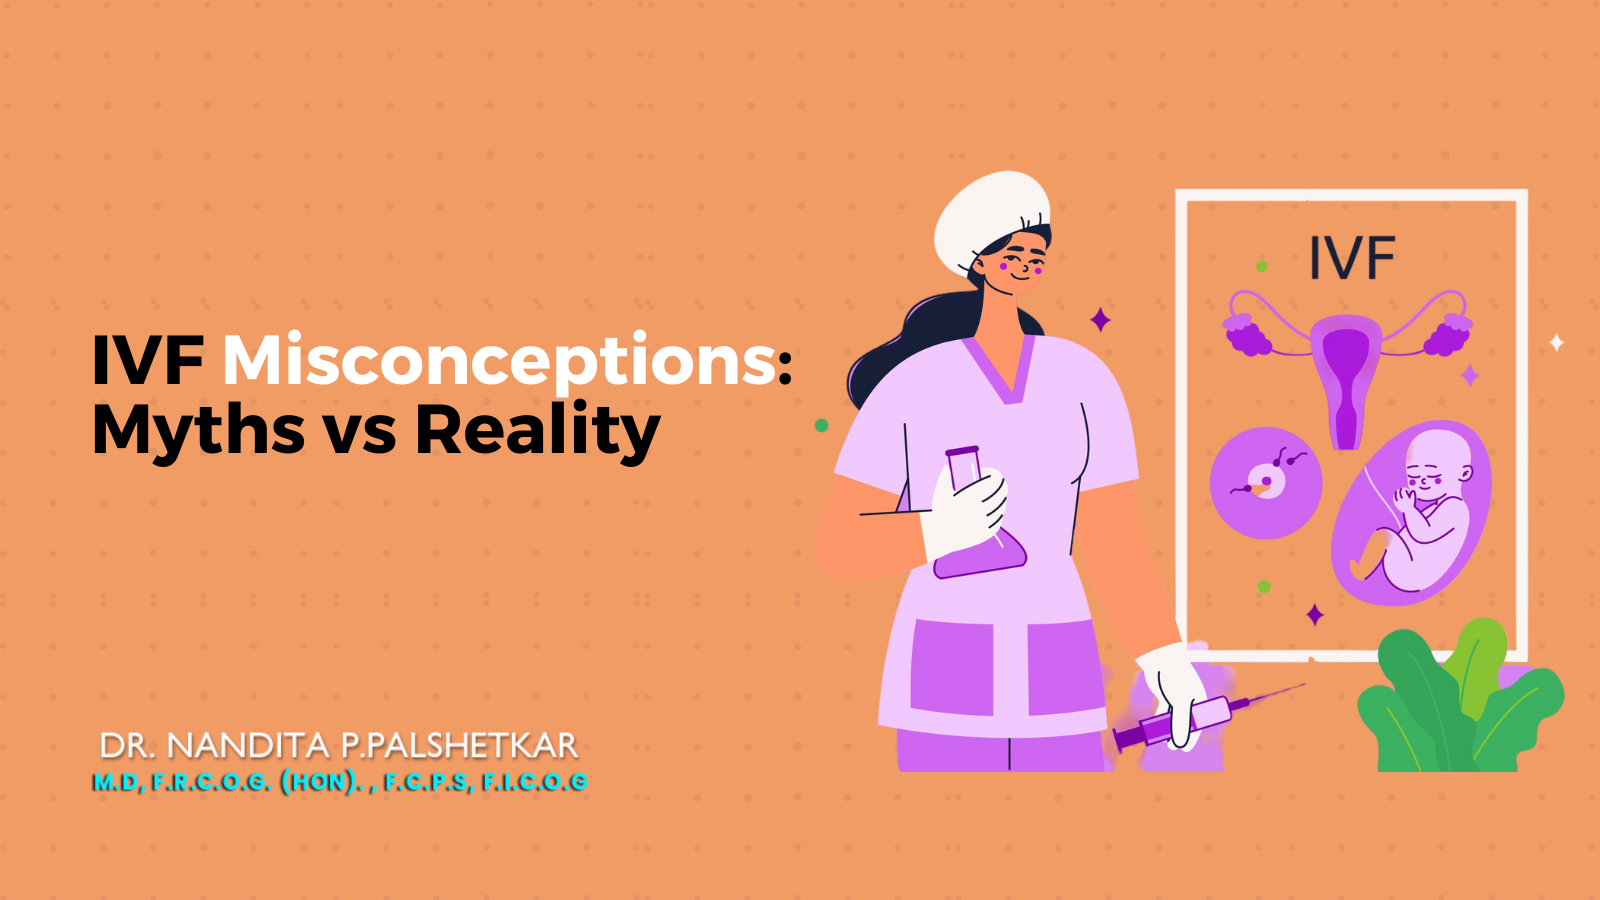 IVF Misconceptions: Myths vs Reality